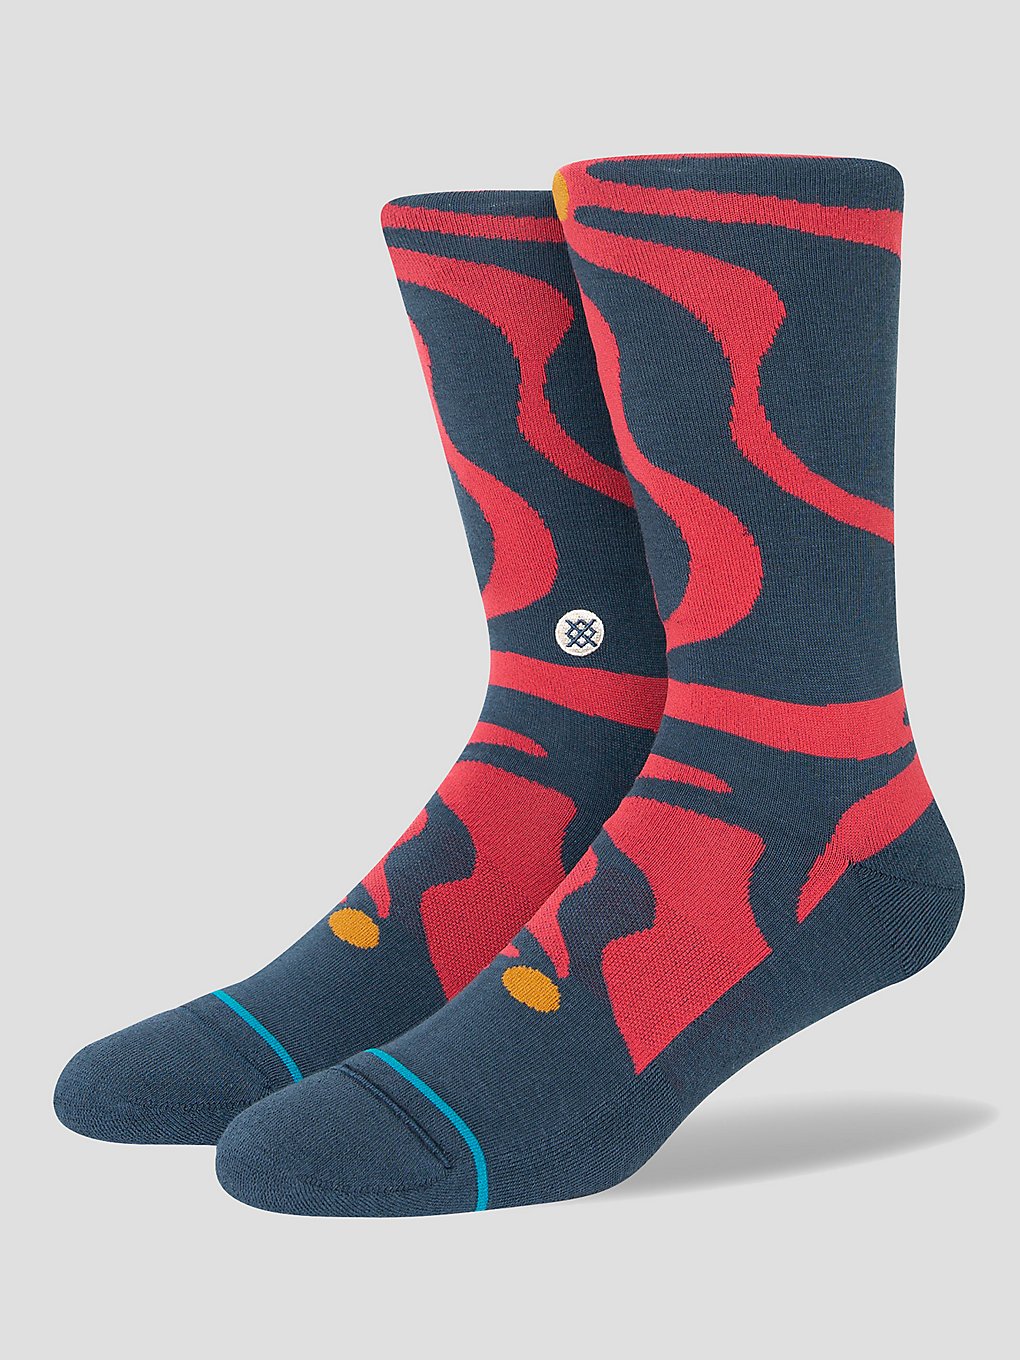 Stance Upside Socks red kaufen